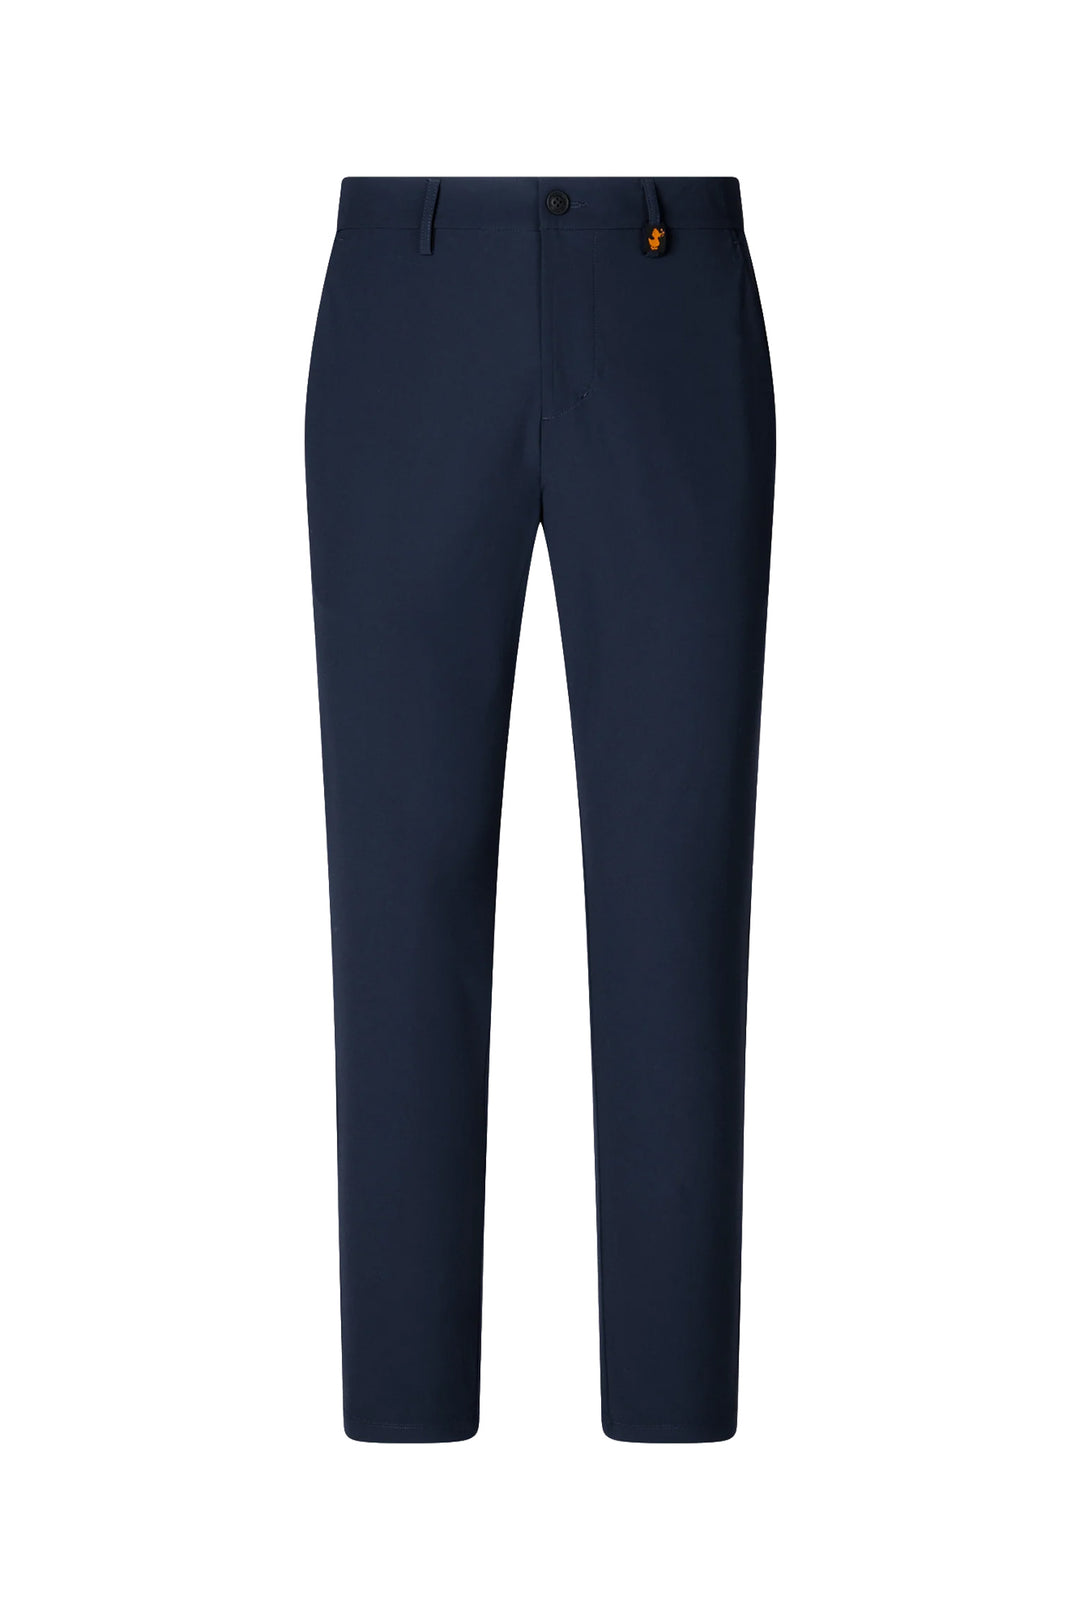 SAVE THE DUCK Pantaloni chino slim blu navy “STEVE” in nylon stretch - Mancinelli 1954